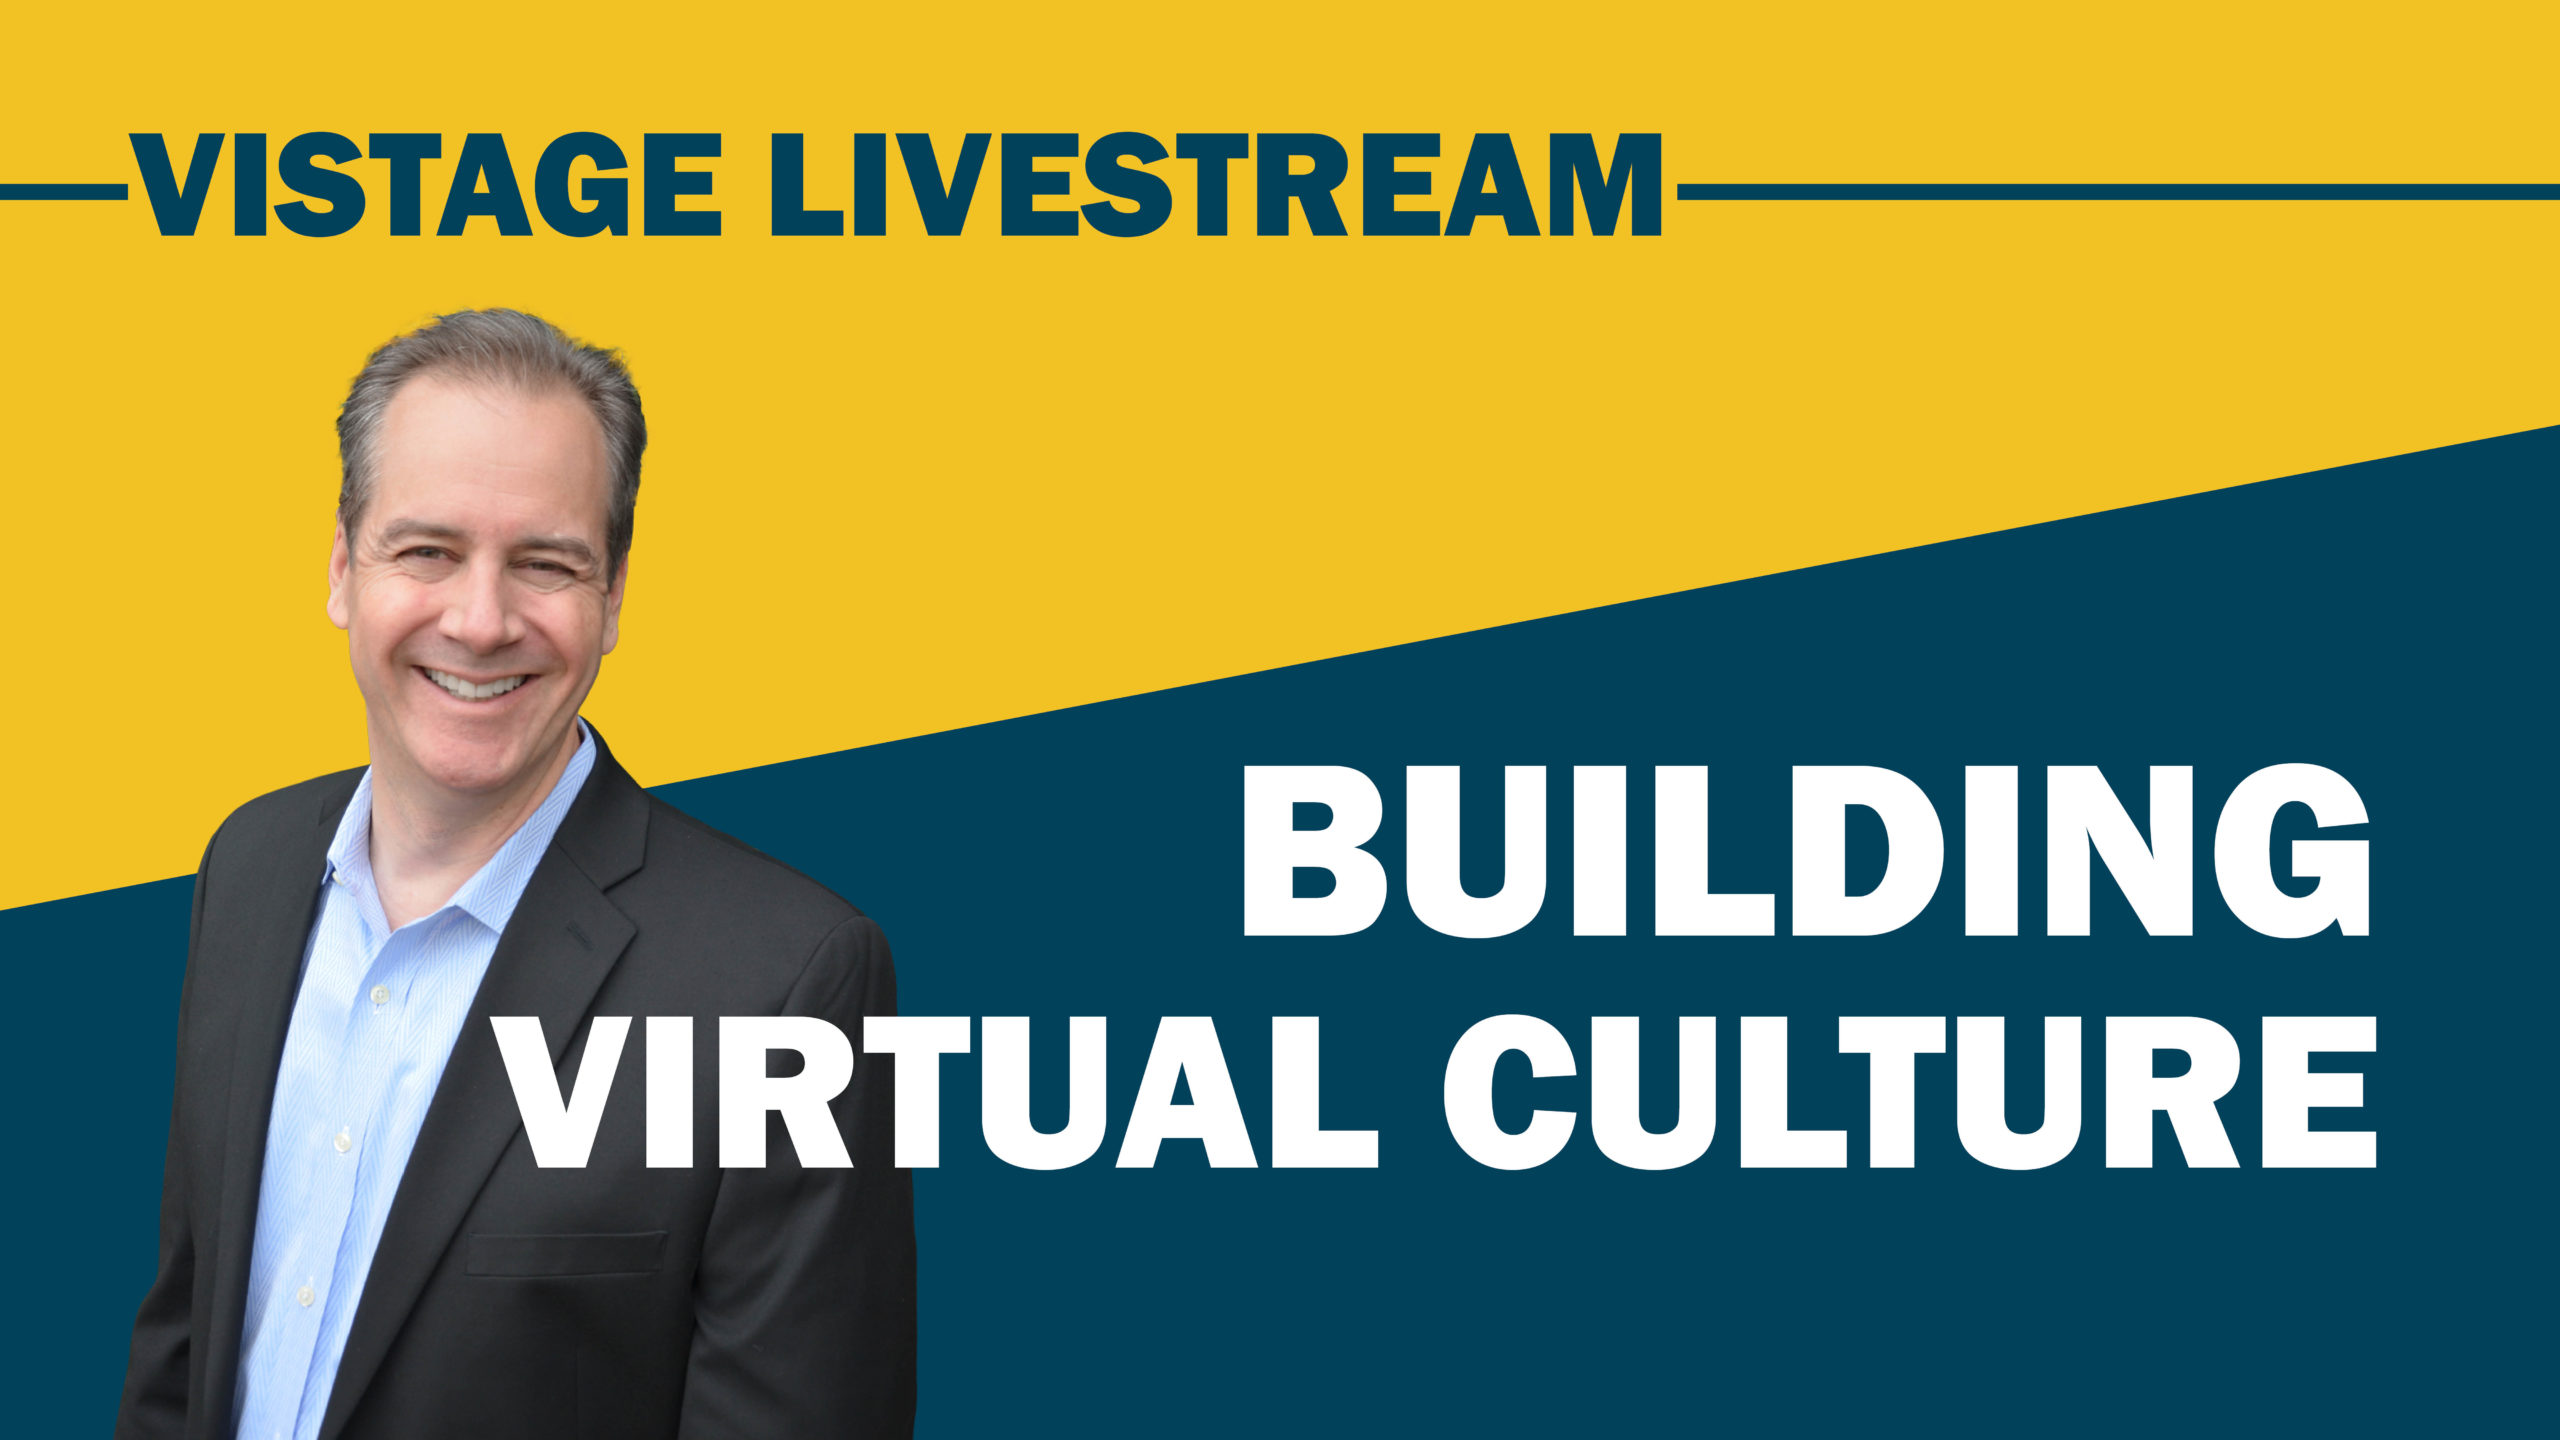 Vistage Livestream – Virtual Culture